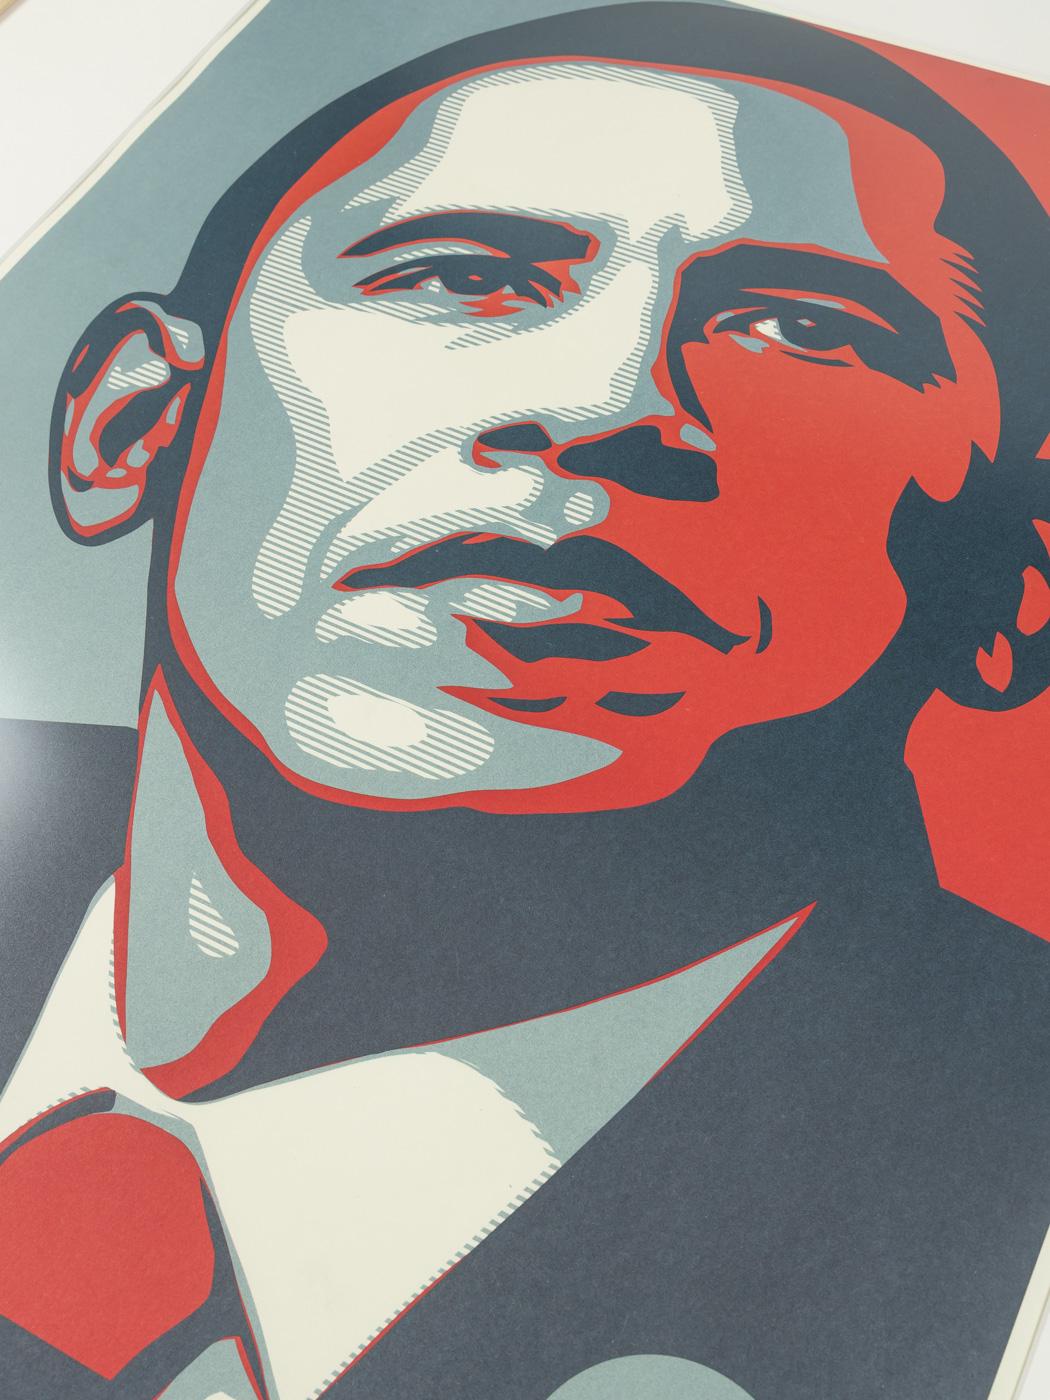 obama 08 poster